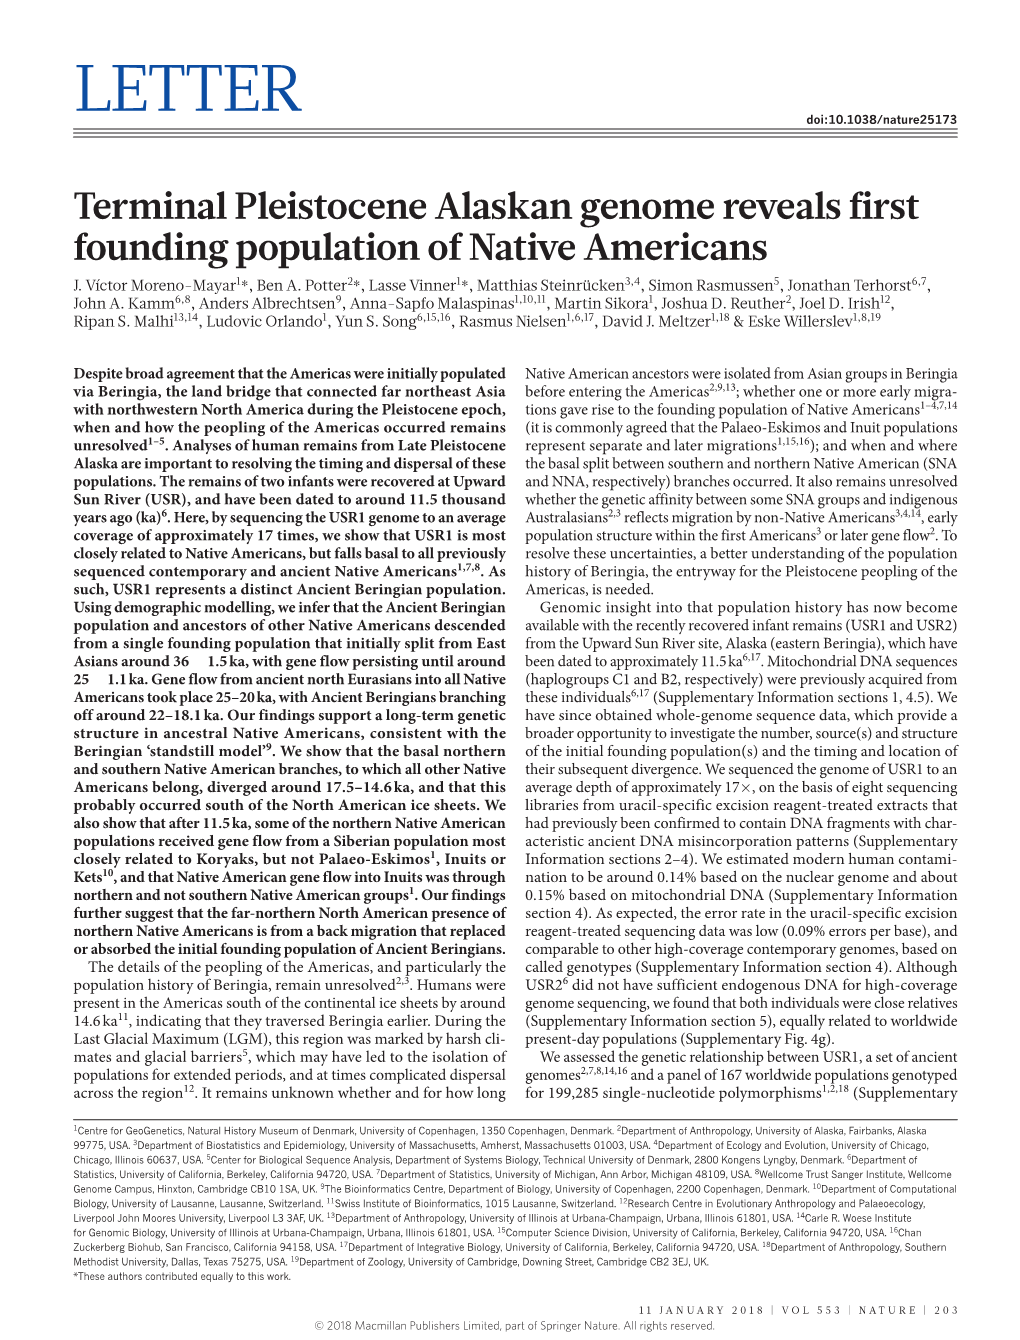 Terminal Pleistocene Alaskan Genome Reveals First Founding Population of Native Americans J